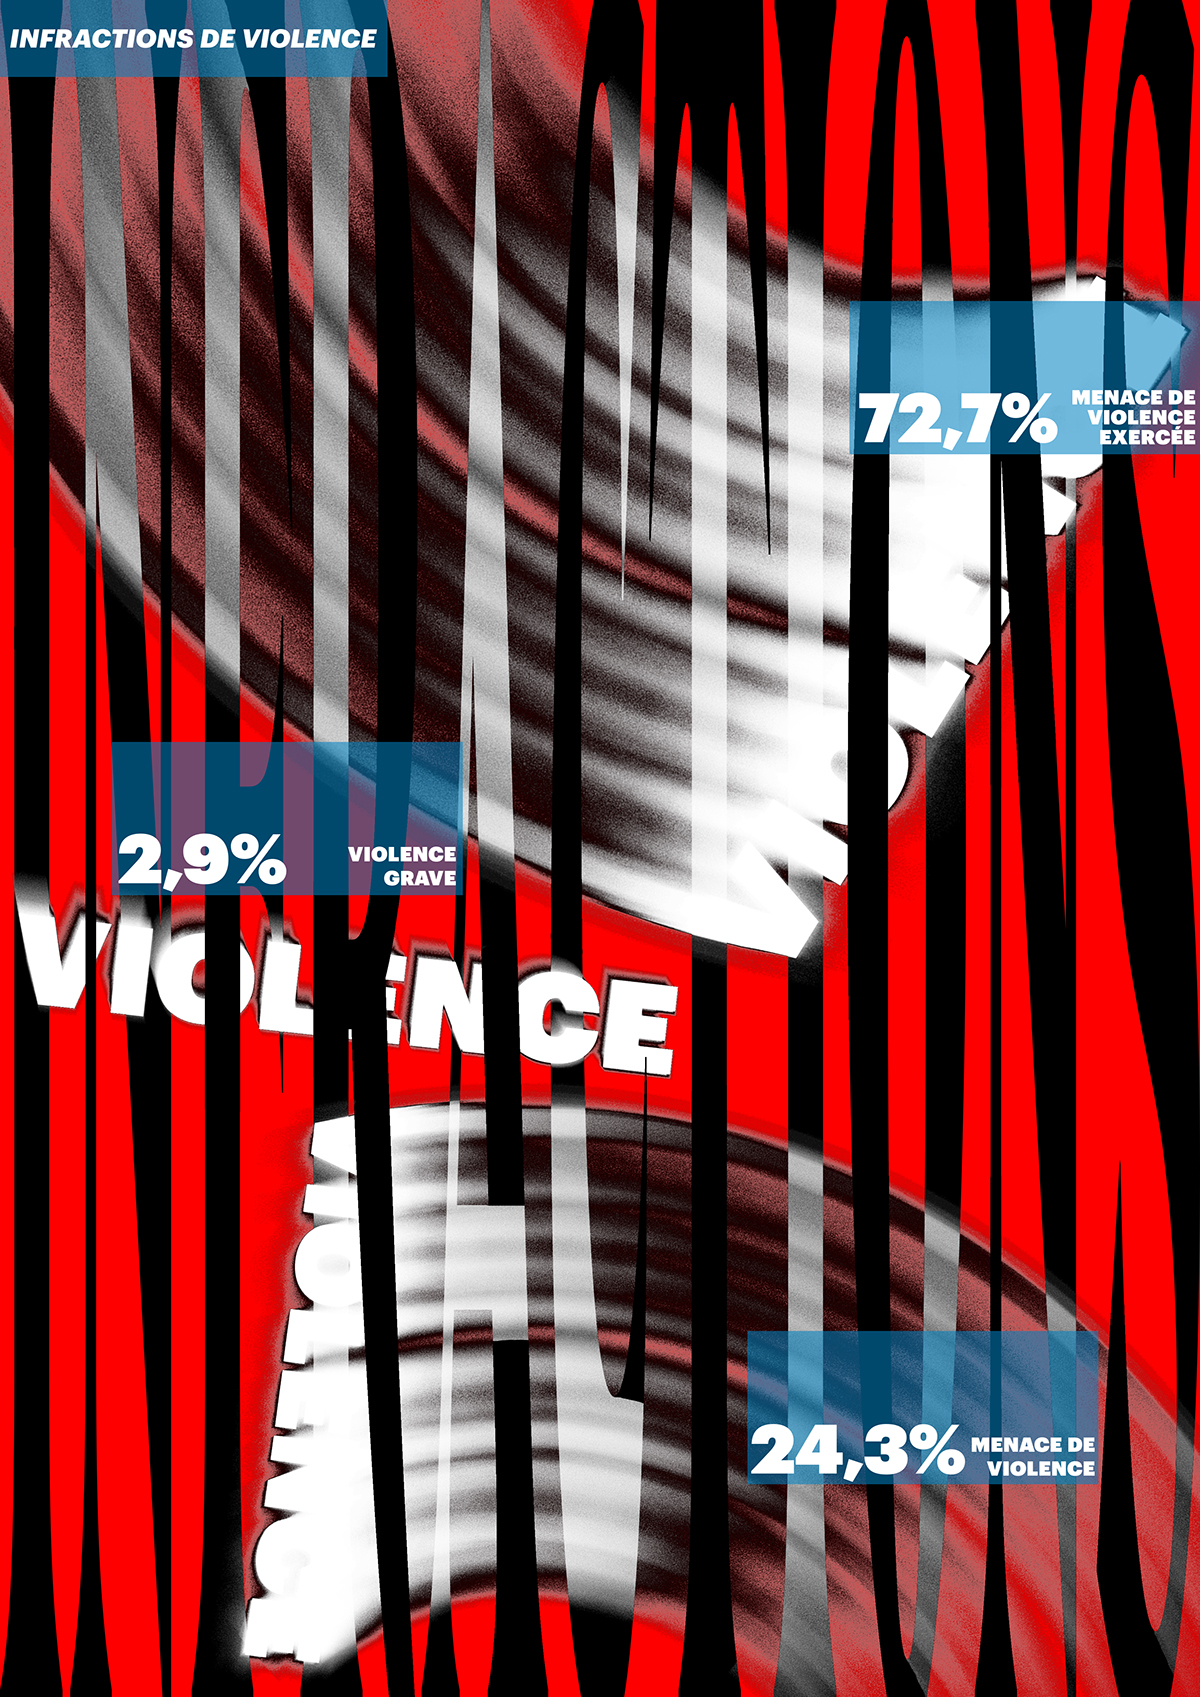 statistiques violence Suisse geneve pourcentage meurtre crime blanc noir statistics percentage murder poster